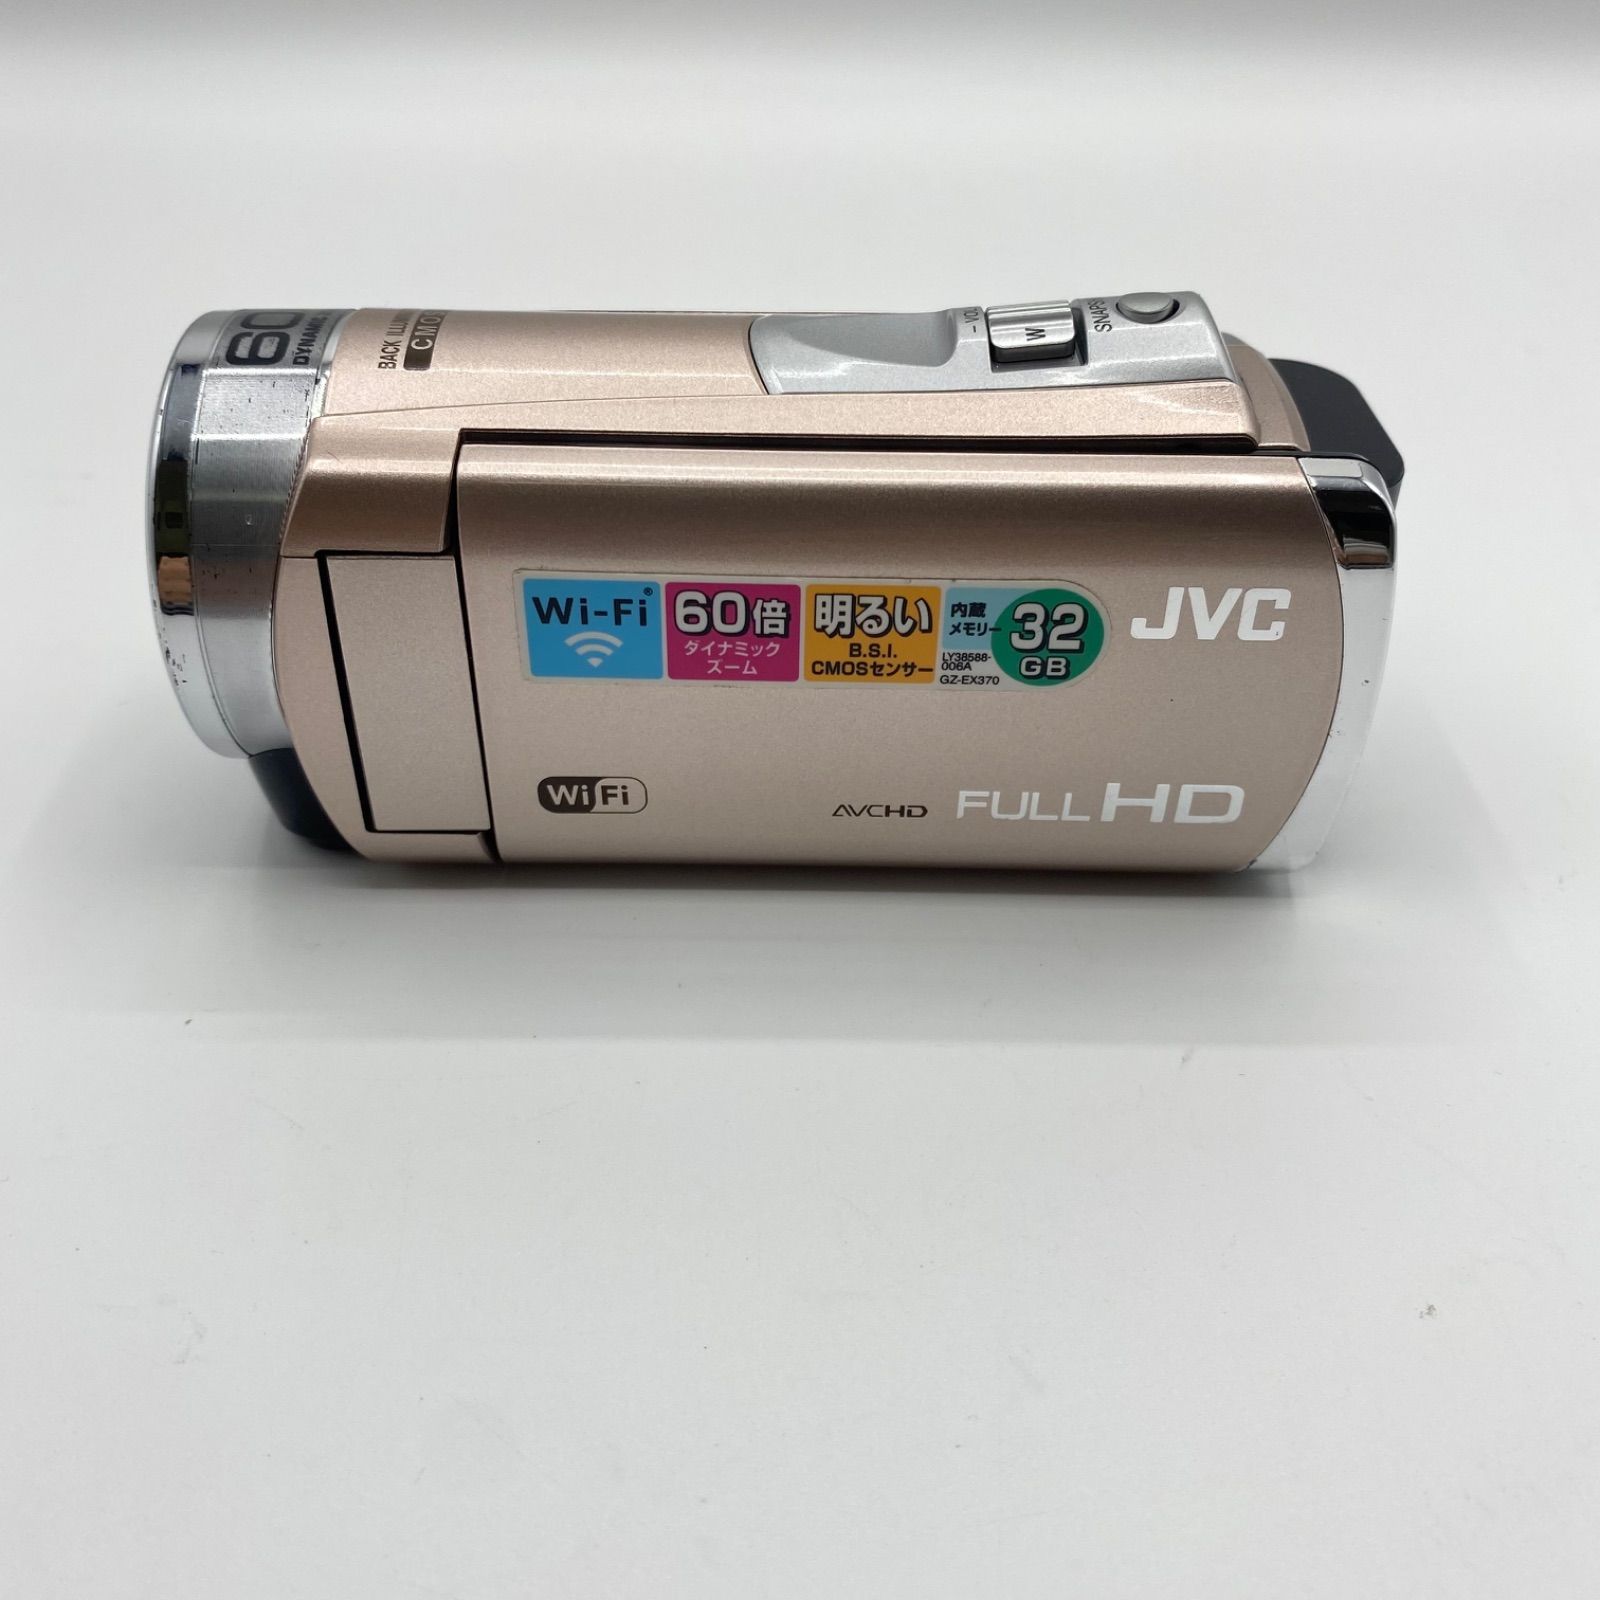 GZ-EX370-N JVC ケンウッド デジタルビデオカメラ ハンディカム ピンクゴールド - ゲームショップけい - メルカリ